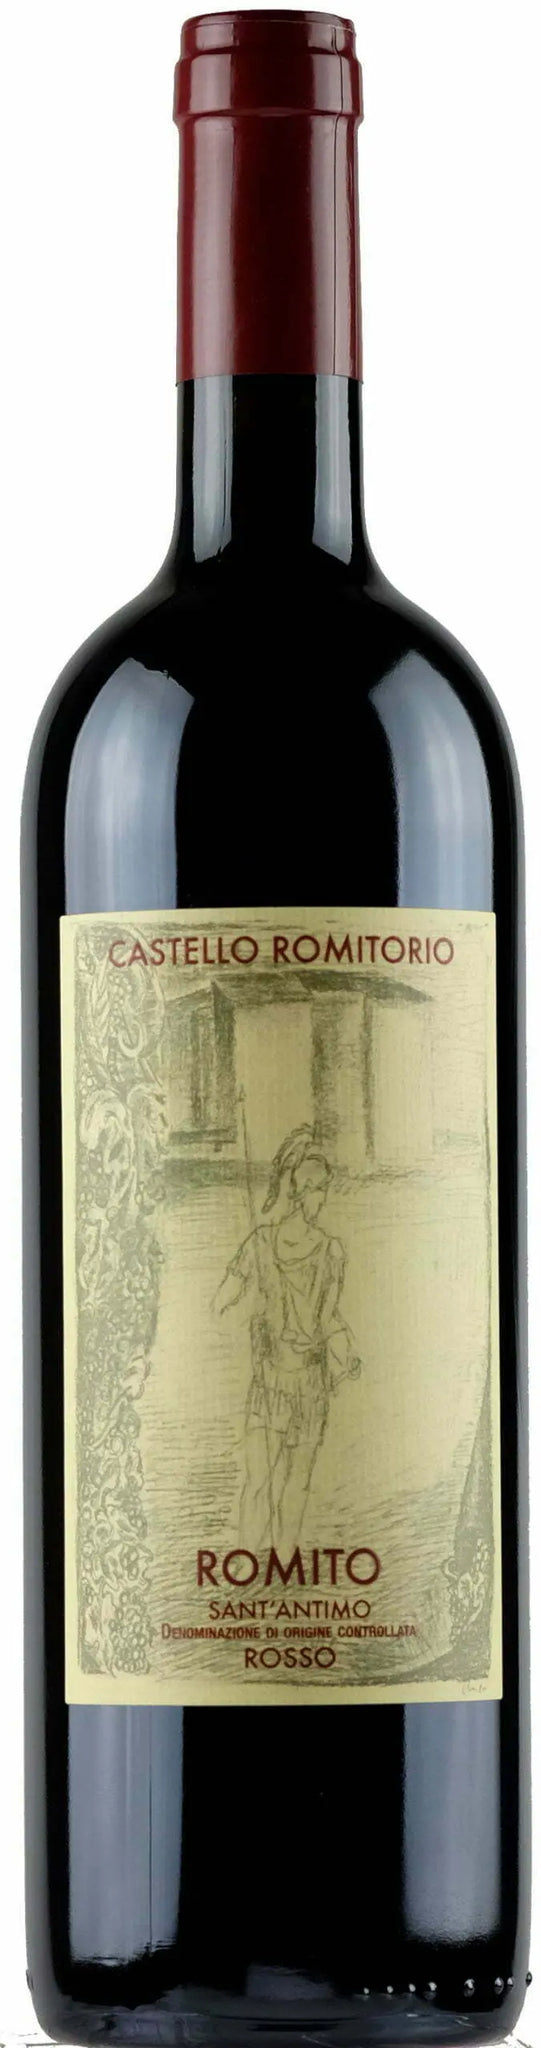 Castello Romitorio Romito Sant Antimo Rosso DOC 2015 (1x75cl) - TwoMoreGlasses.com